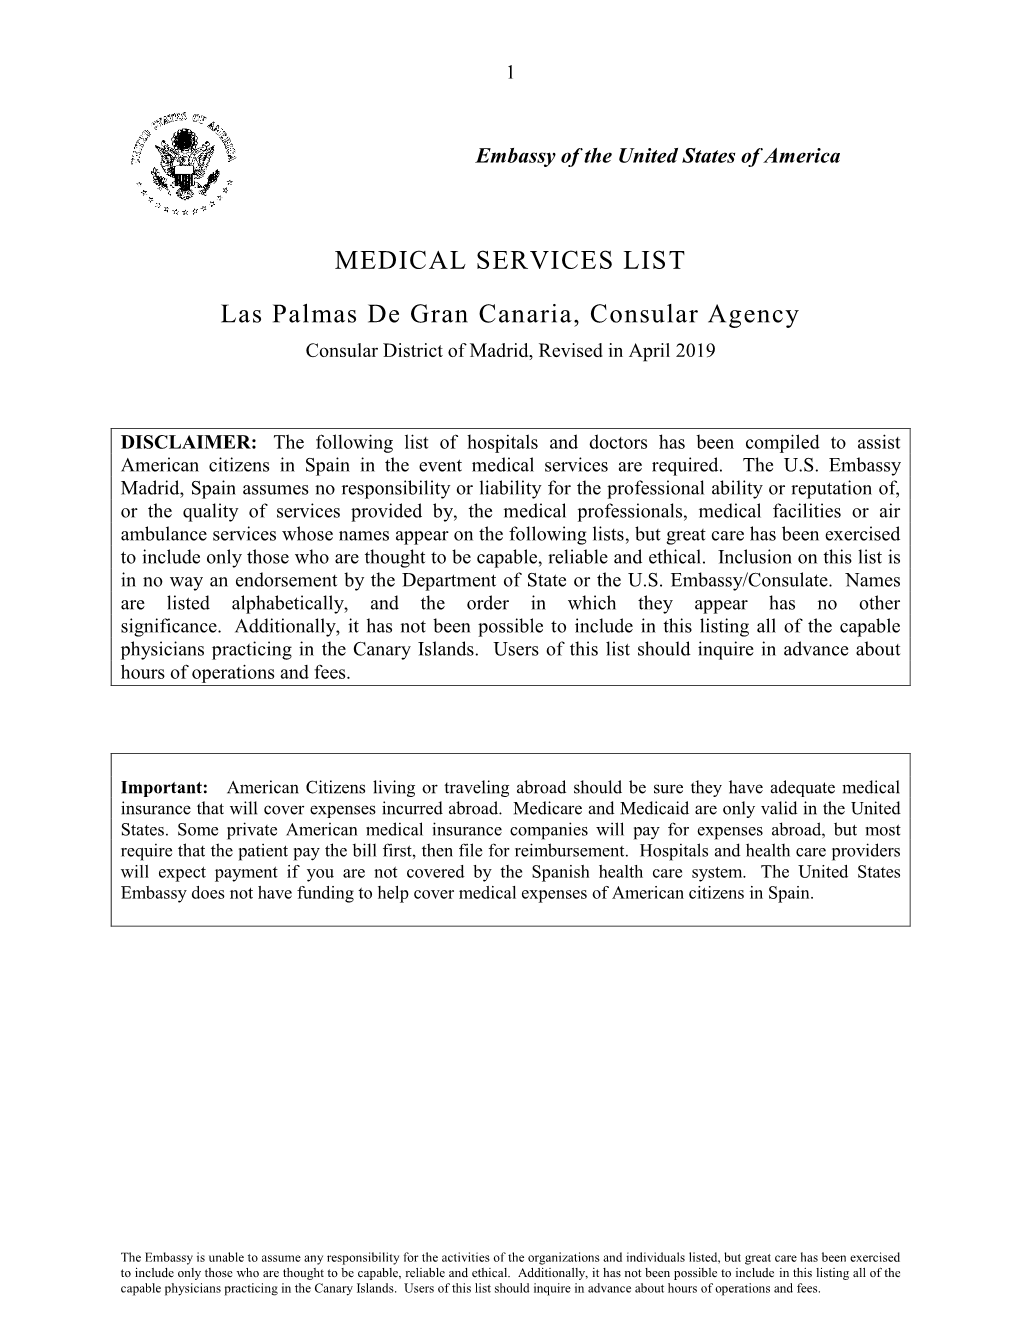 MEDICAL SERVICES LIST Las Palmas De Gran Canaria, Consular